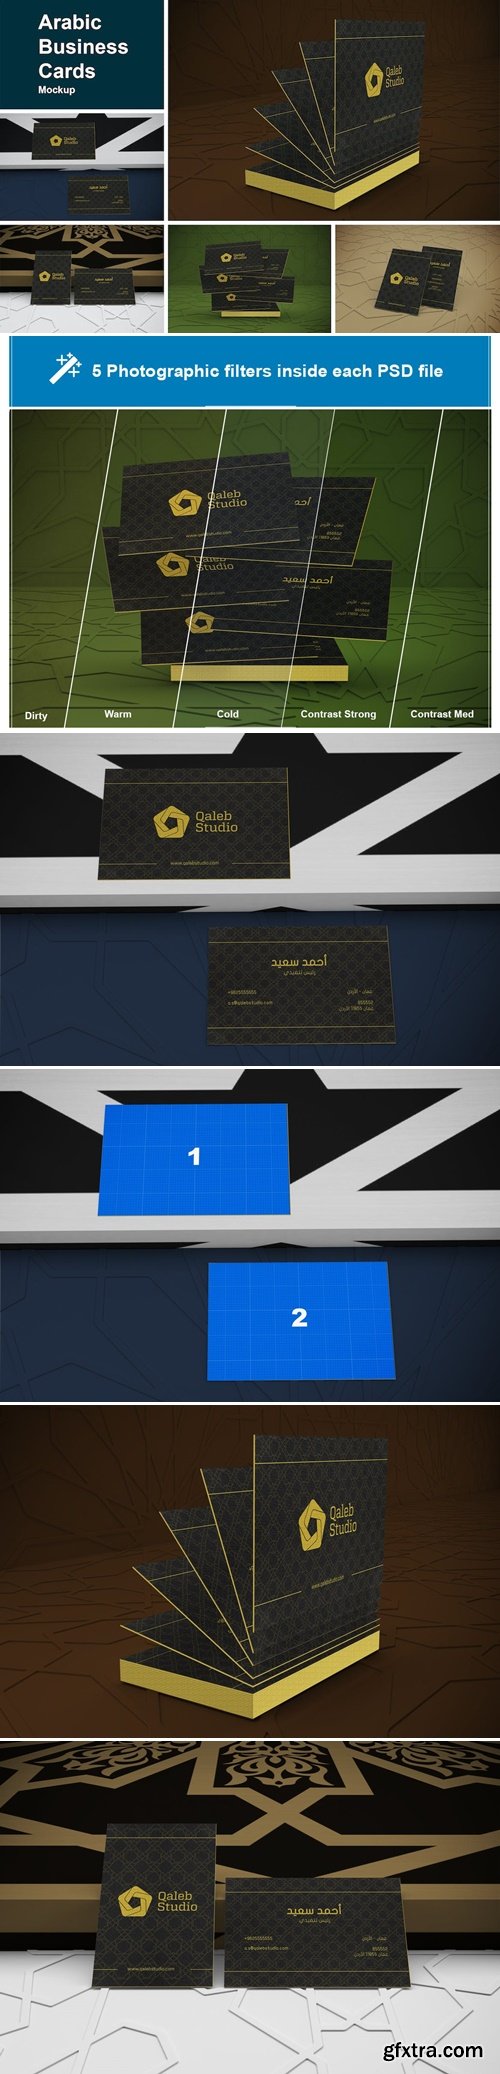 Arabic Business Cards Mockup WHDGM4K